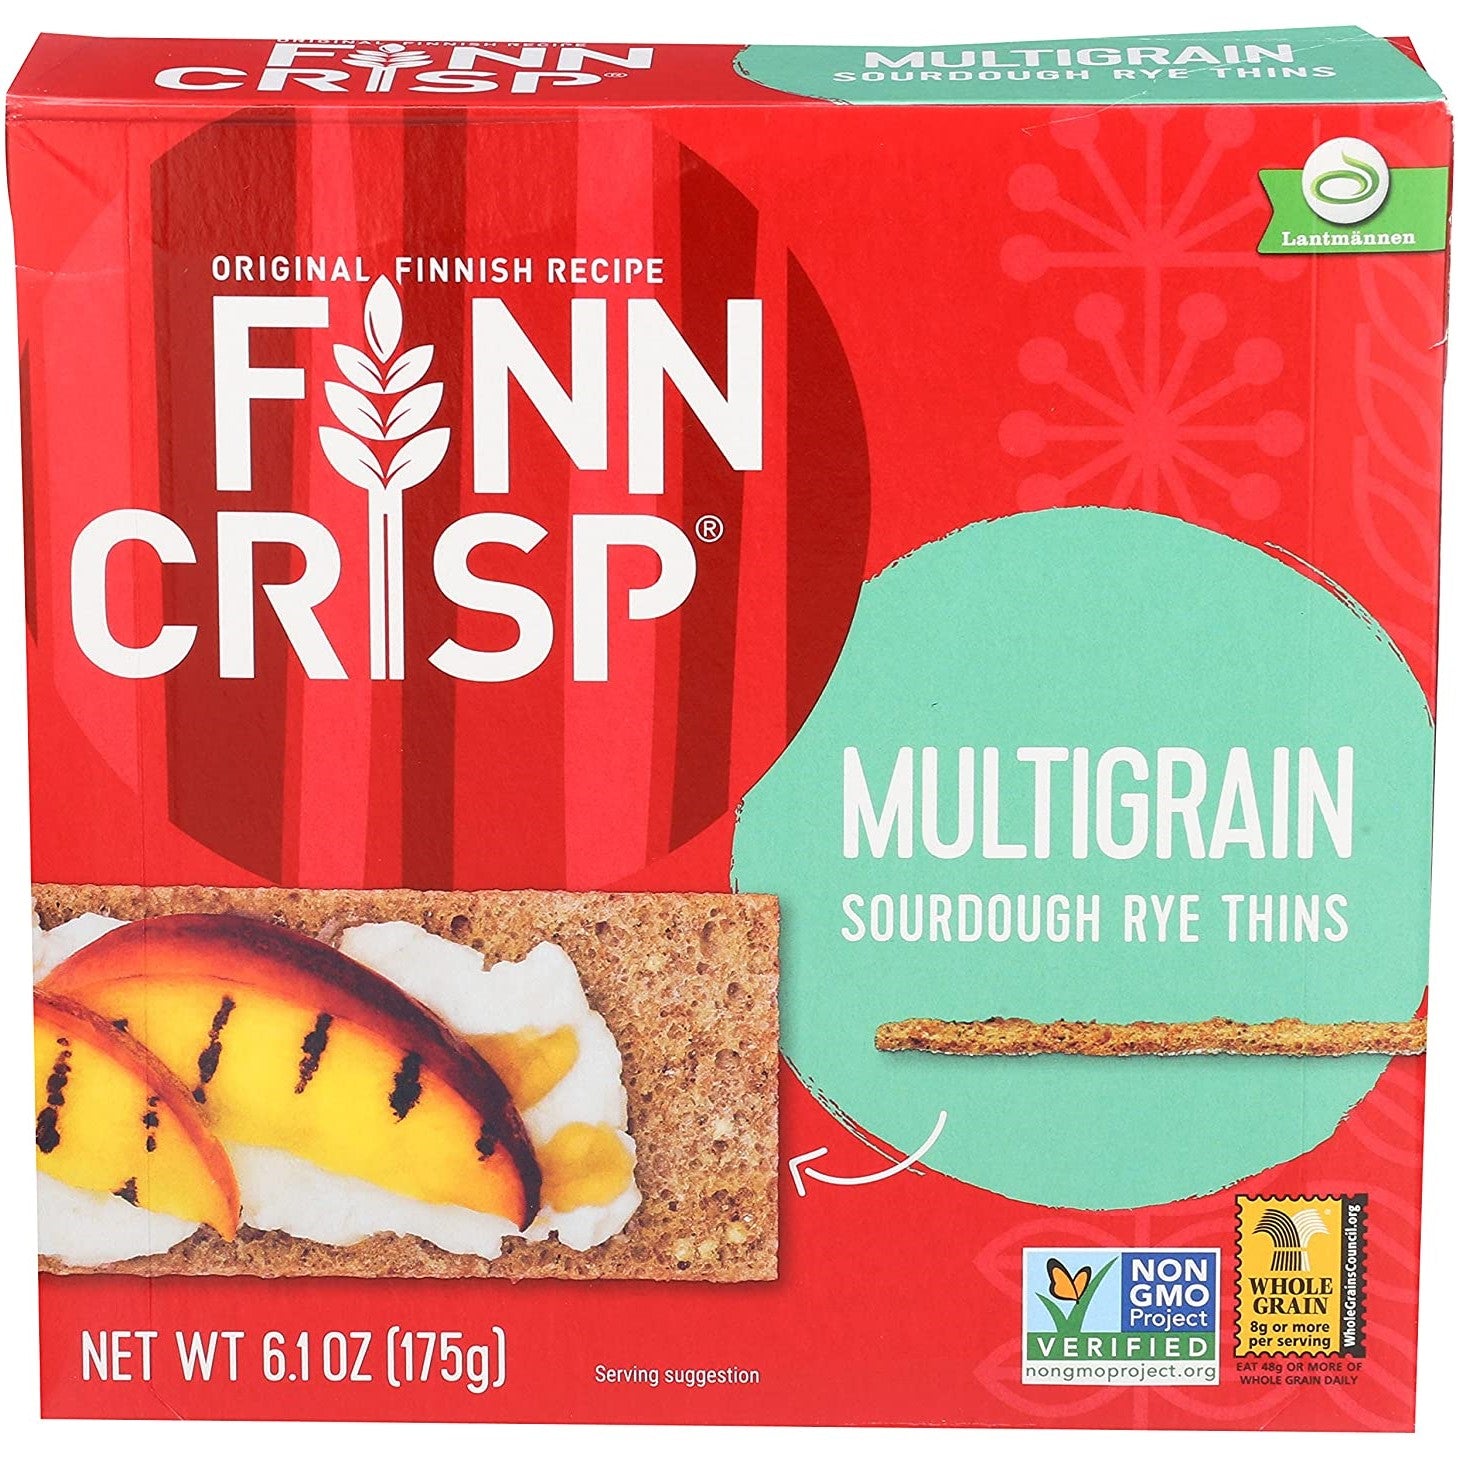 Crisp Swedish Multigrain, Cook Finn 7oz –